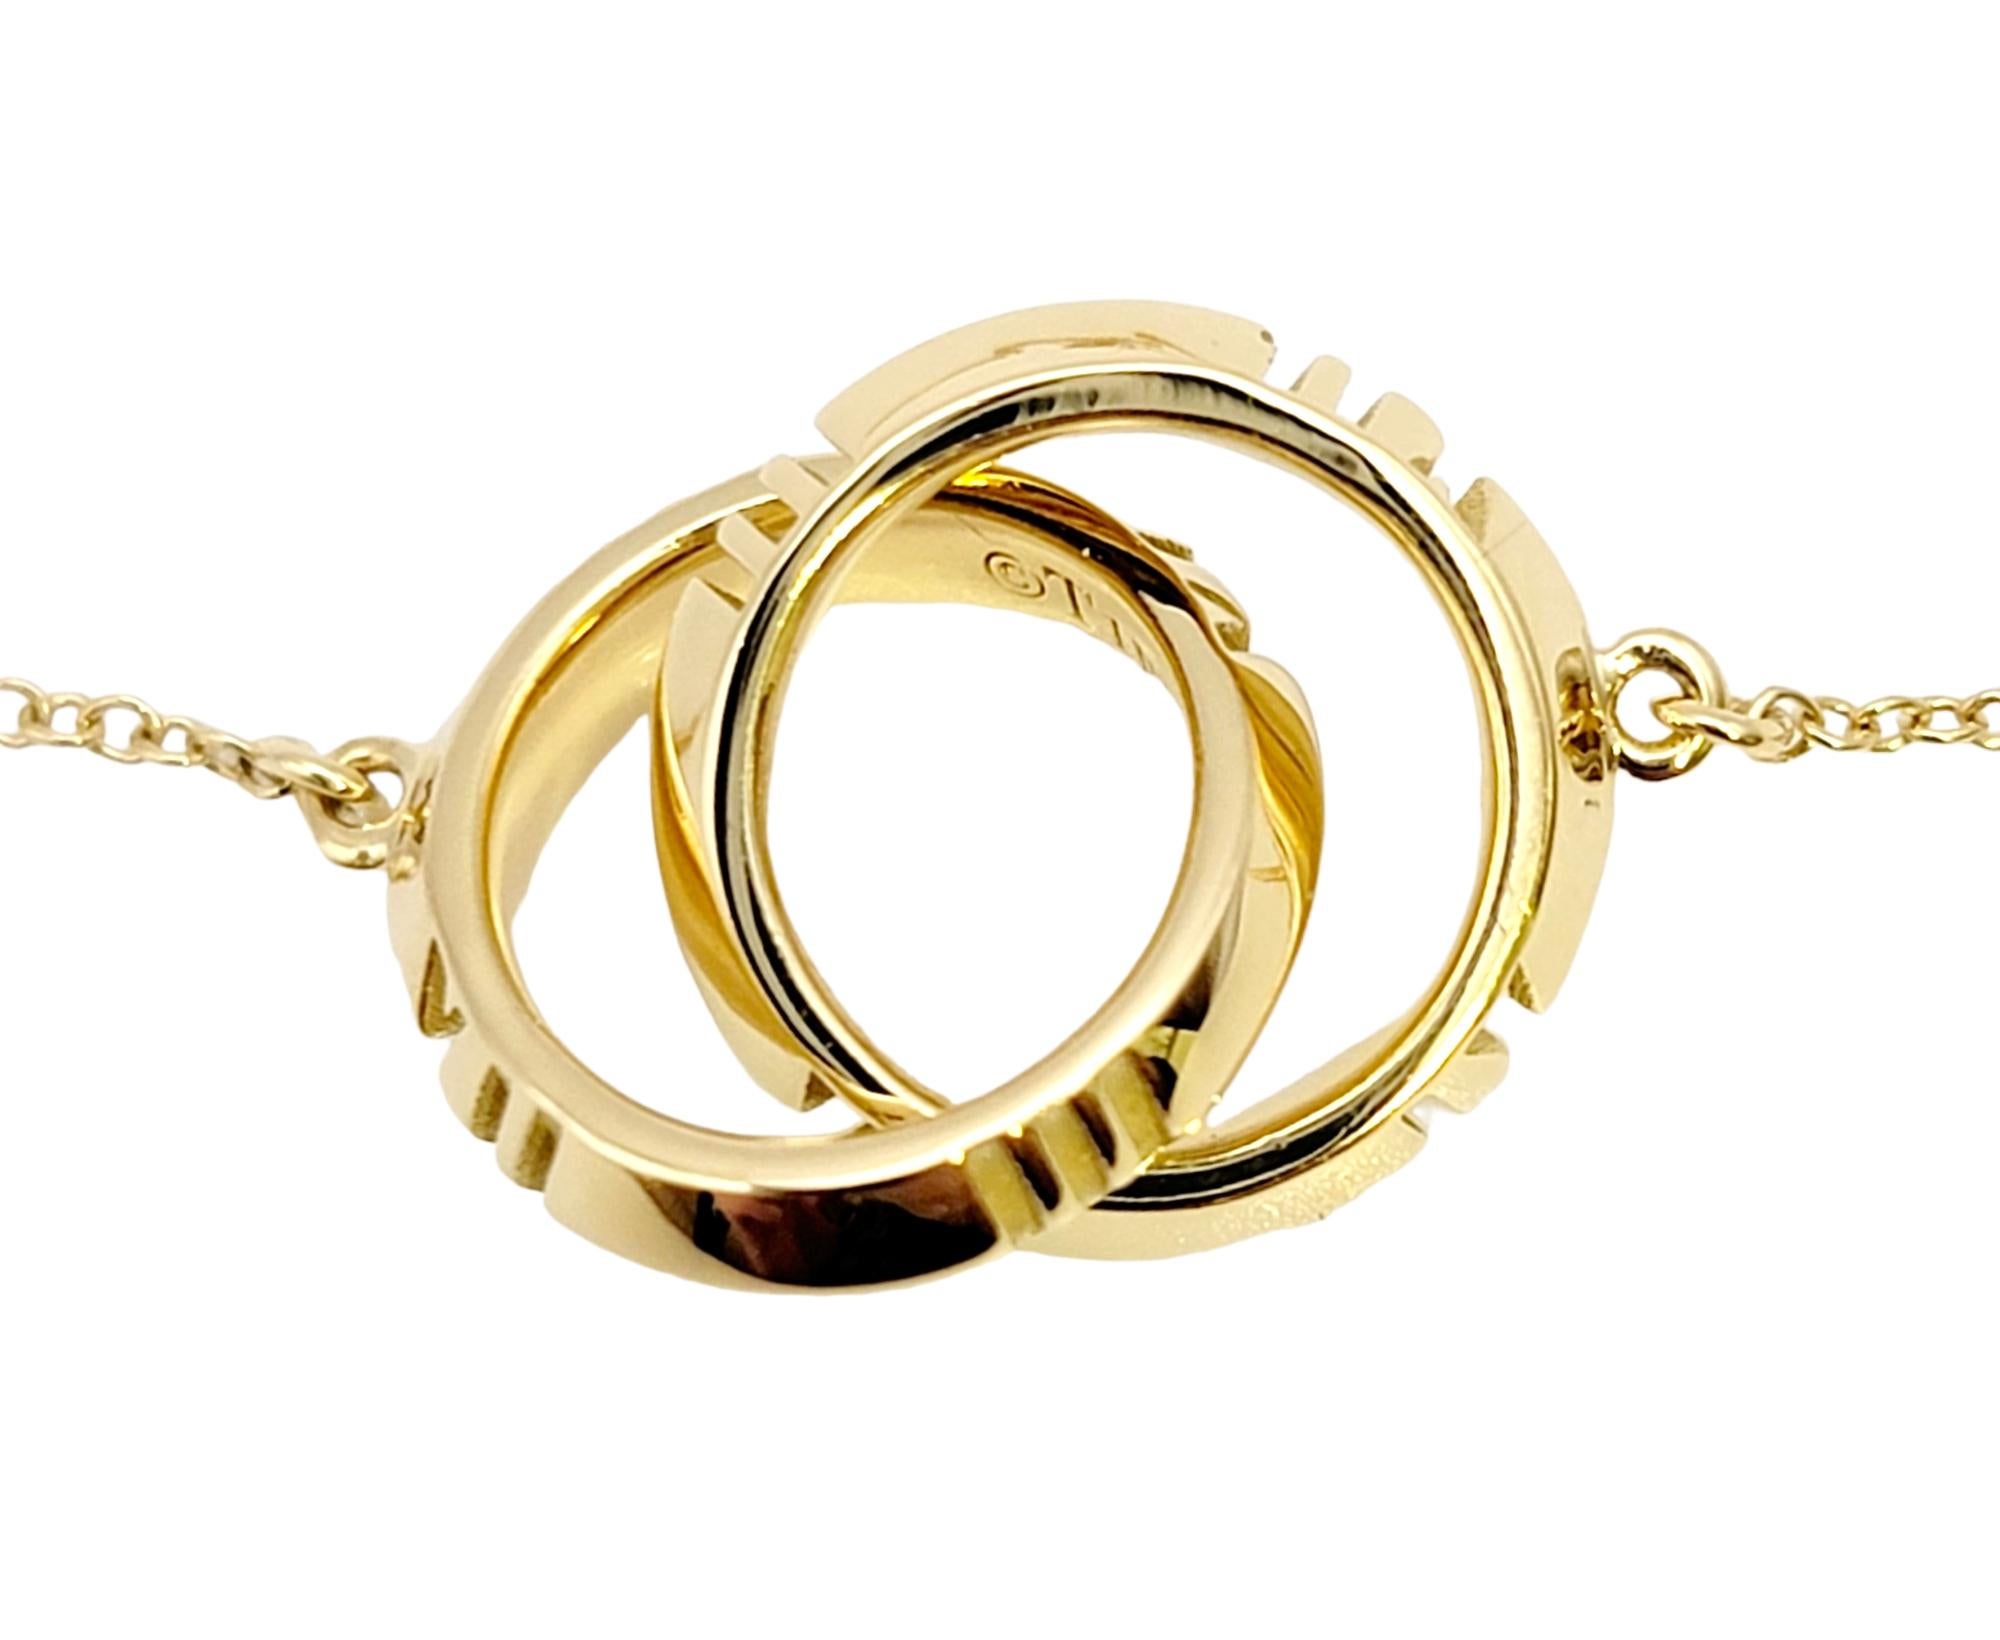 Tiffany & Co. Atlas, collier pendentif en or jaune 18 carats avec pendentif imbriqué en forme de X 2